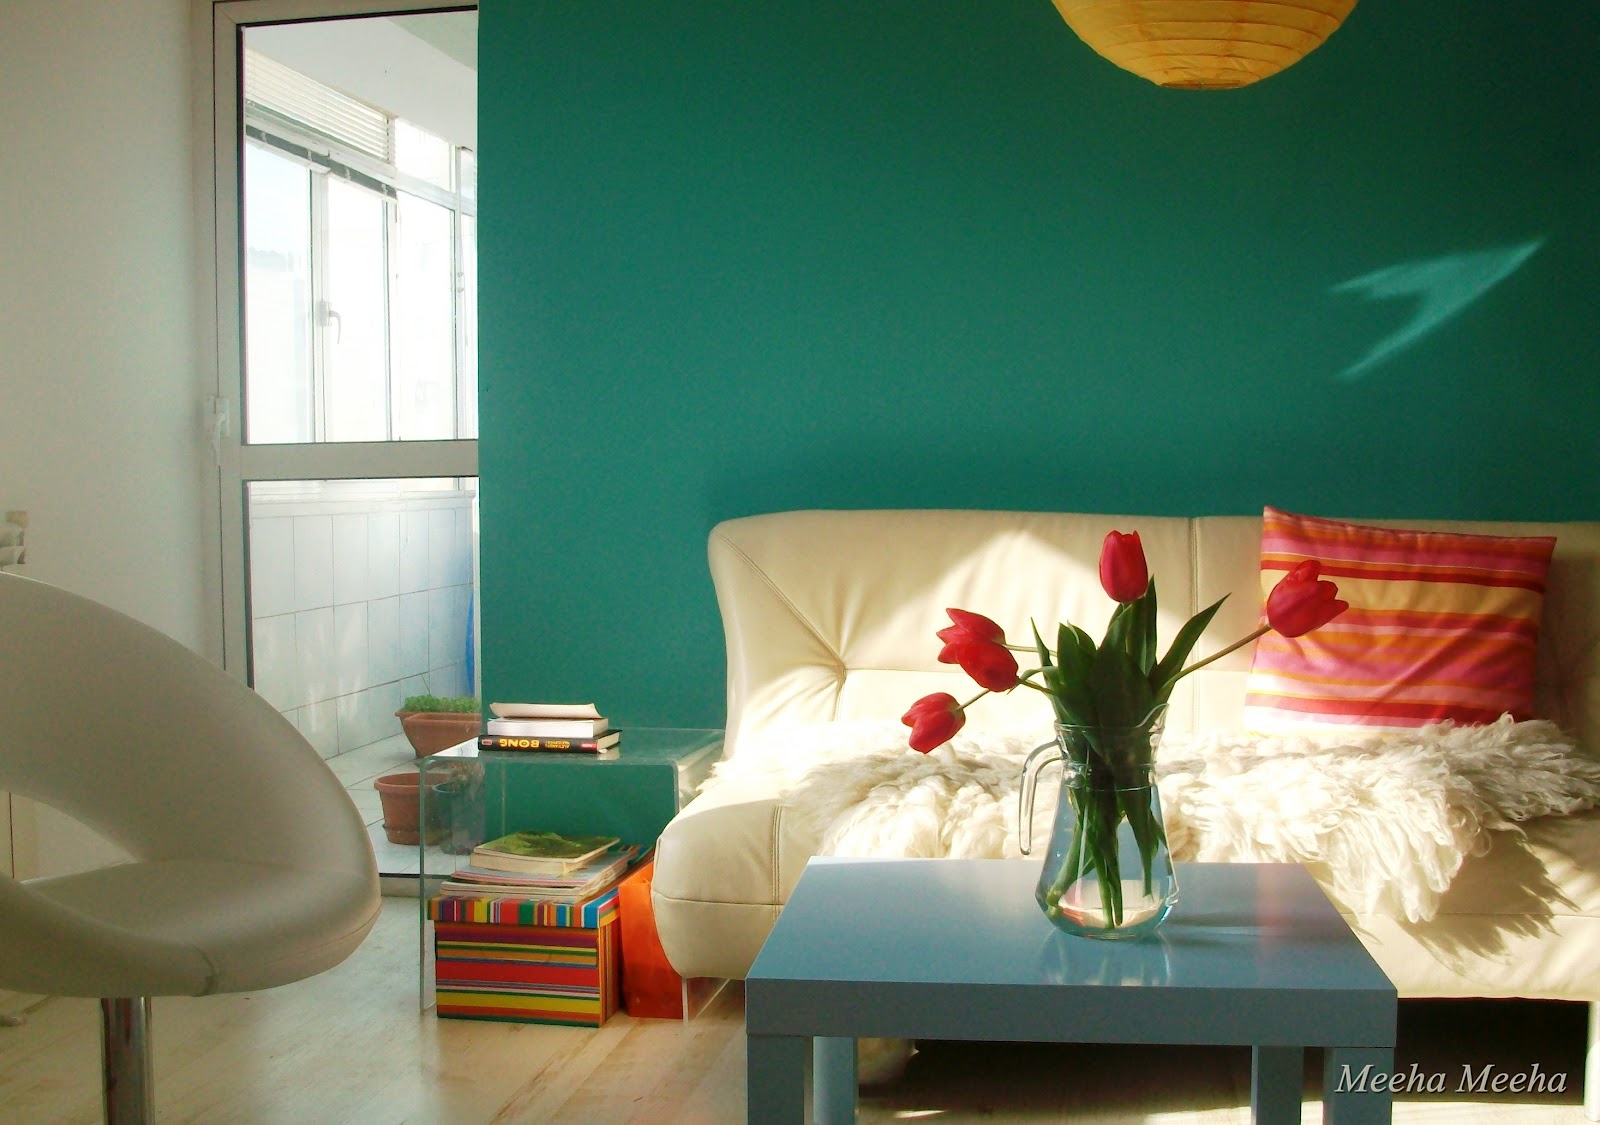 Meeha Meeha: Turquoise living room